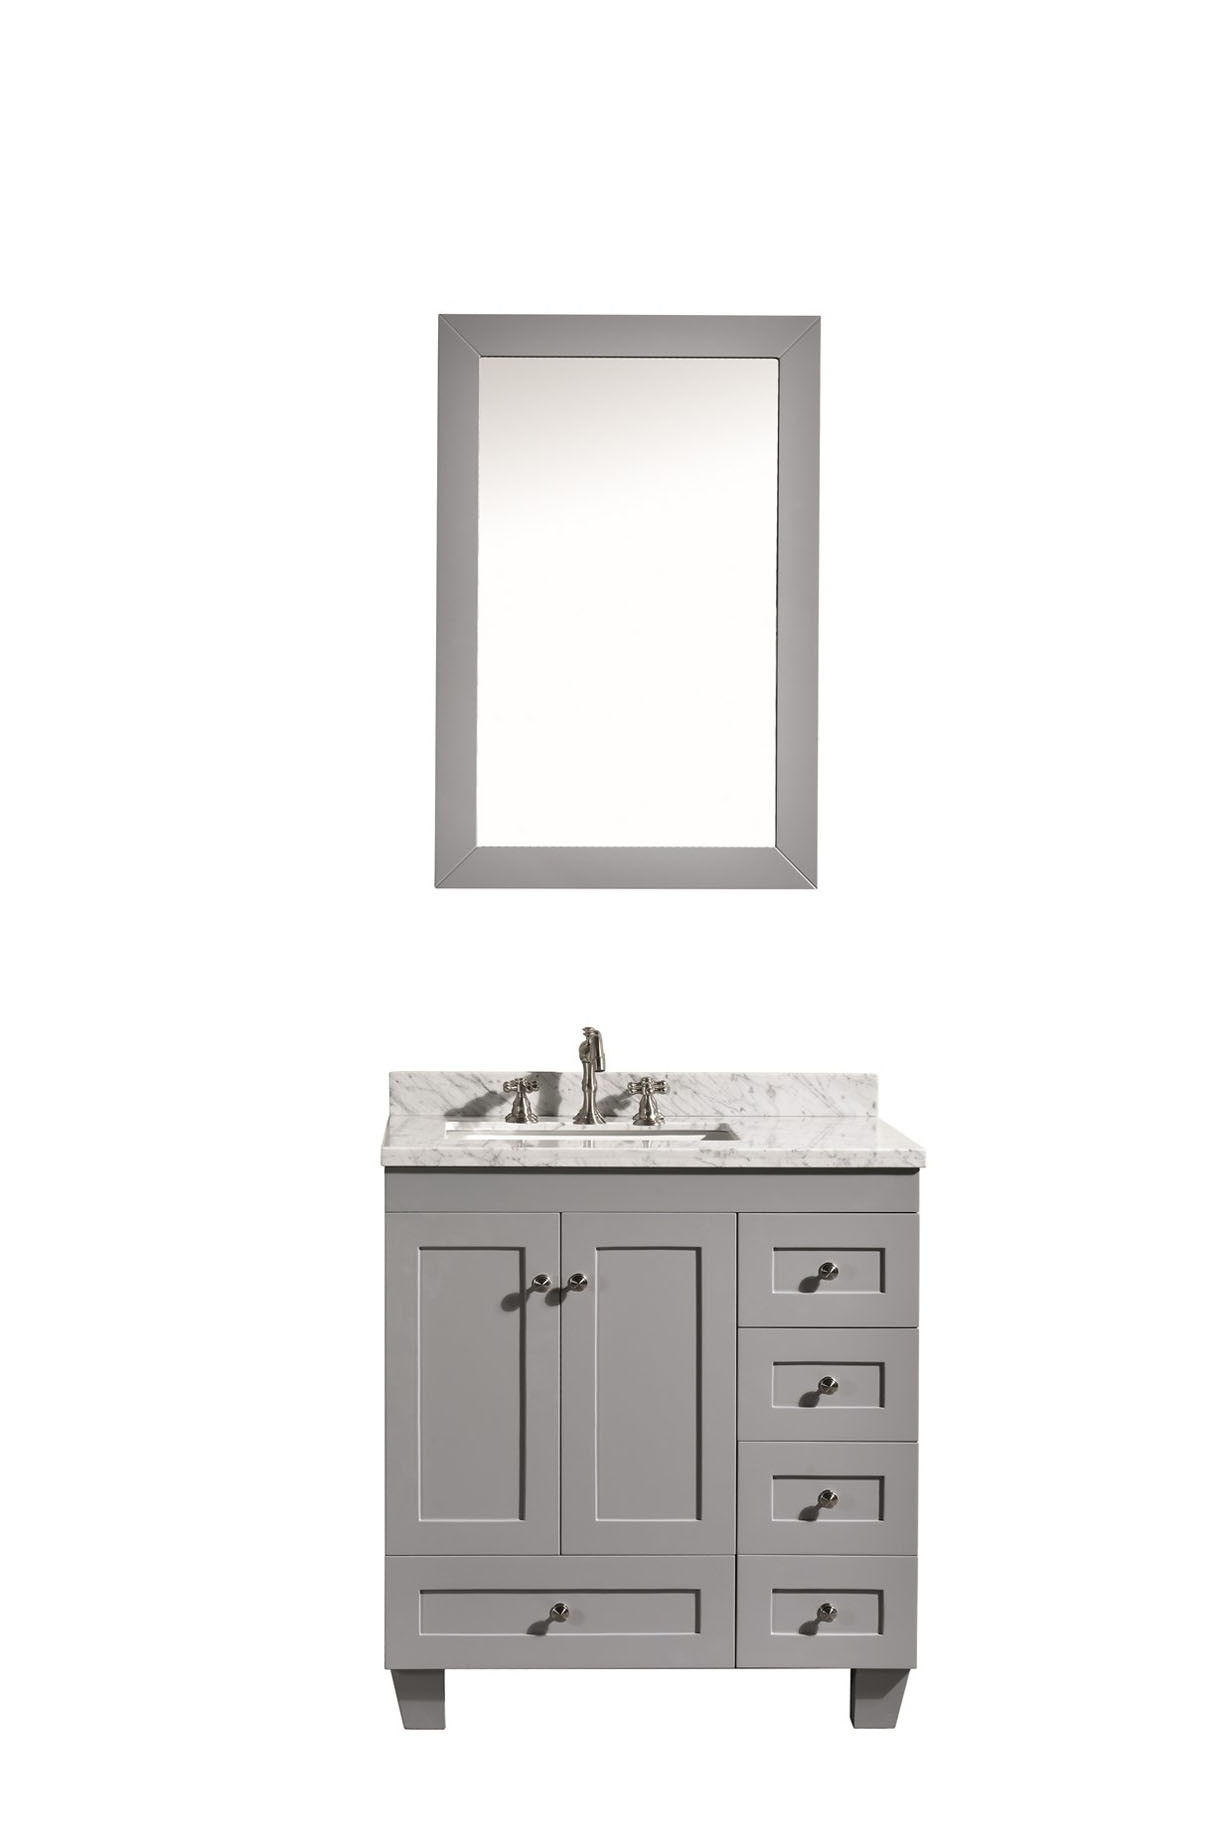 Eviva EVVN69-30 Transitional Bathroom Vanity -  Gray